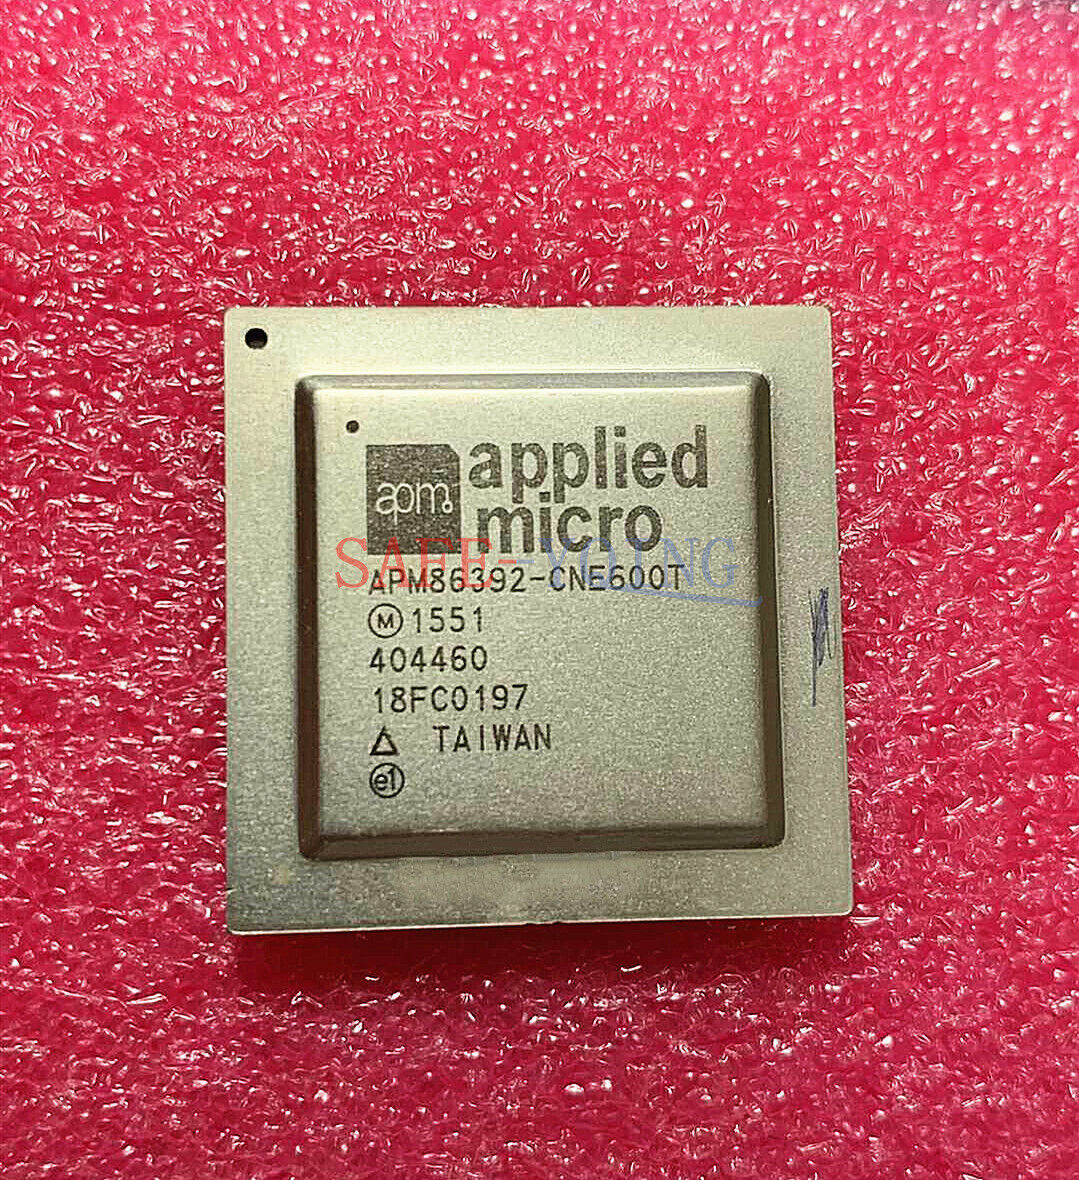 1PCS APM86392-CNE600T applied micro BGA NEW